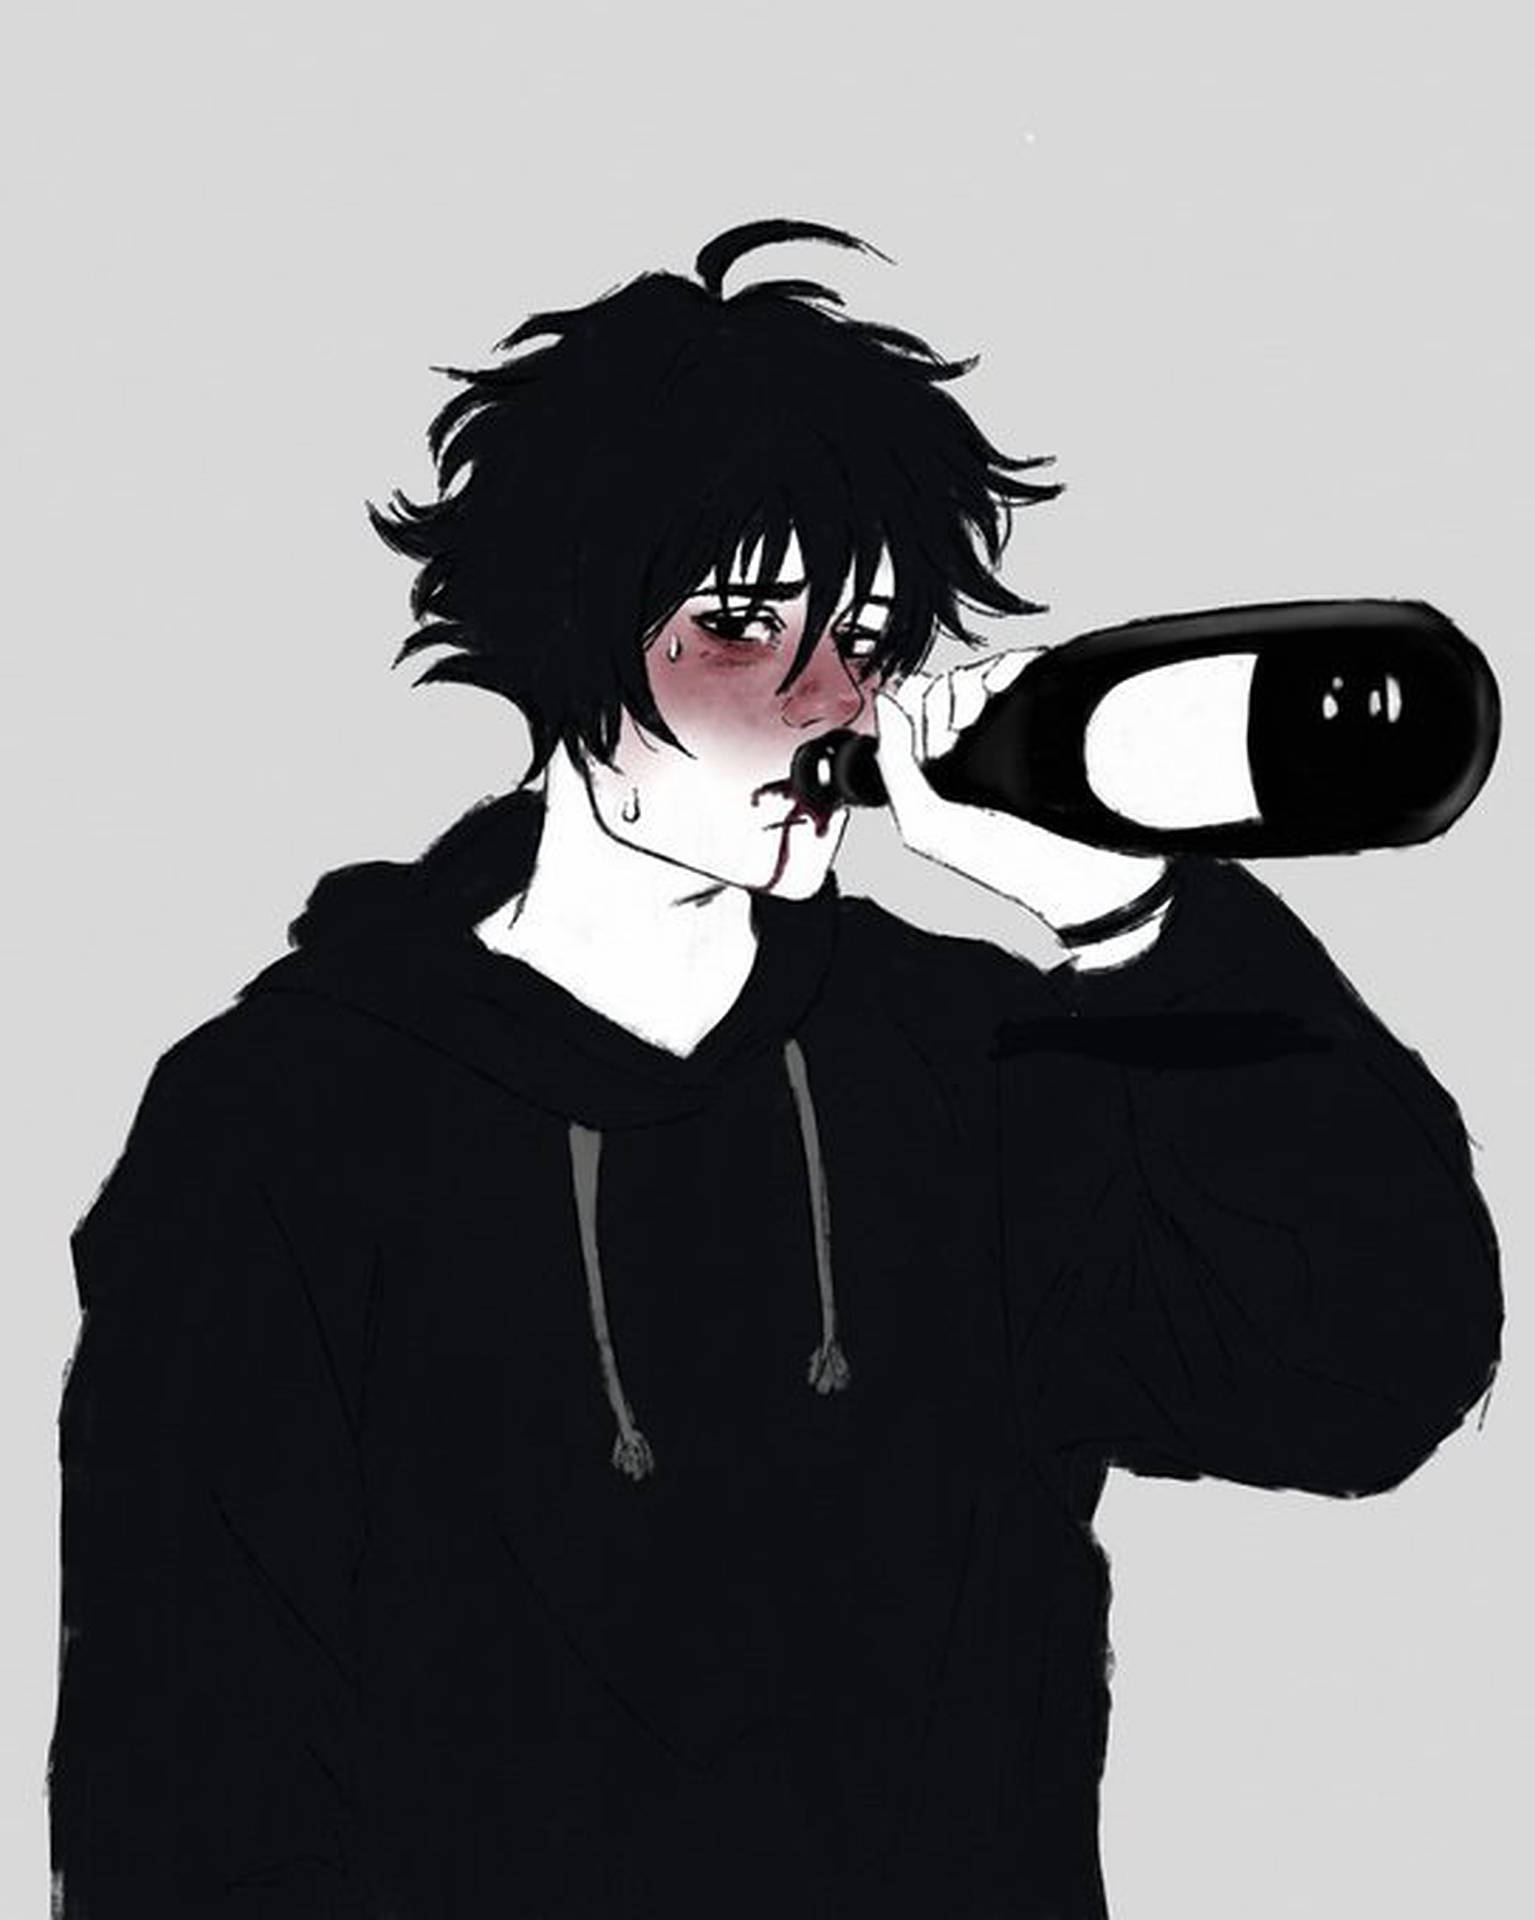 Emodrinking Wine Pfp (profilbild) Would Translate To 